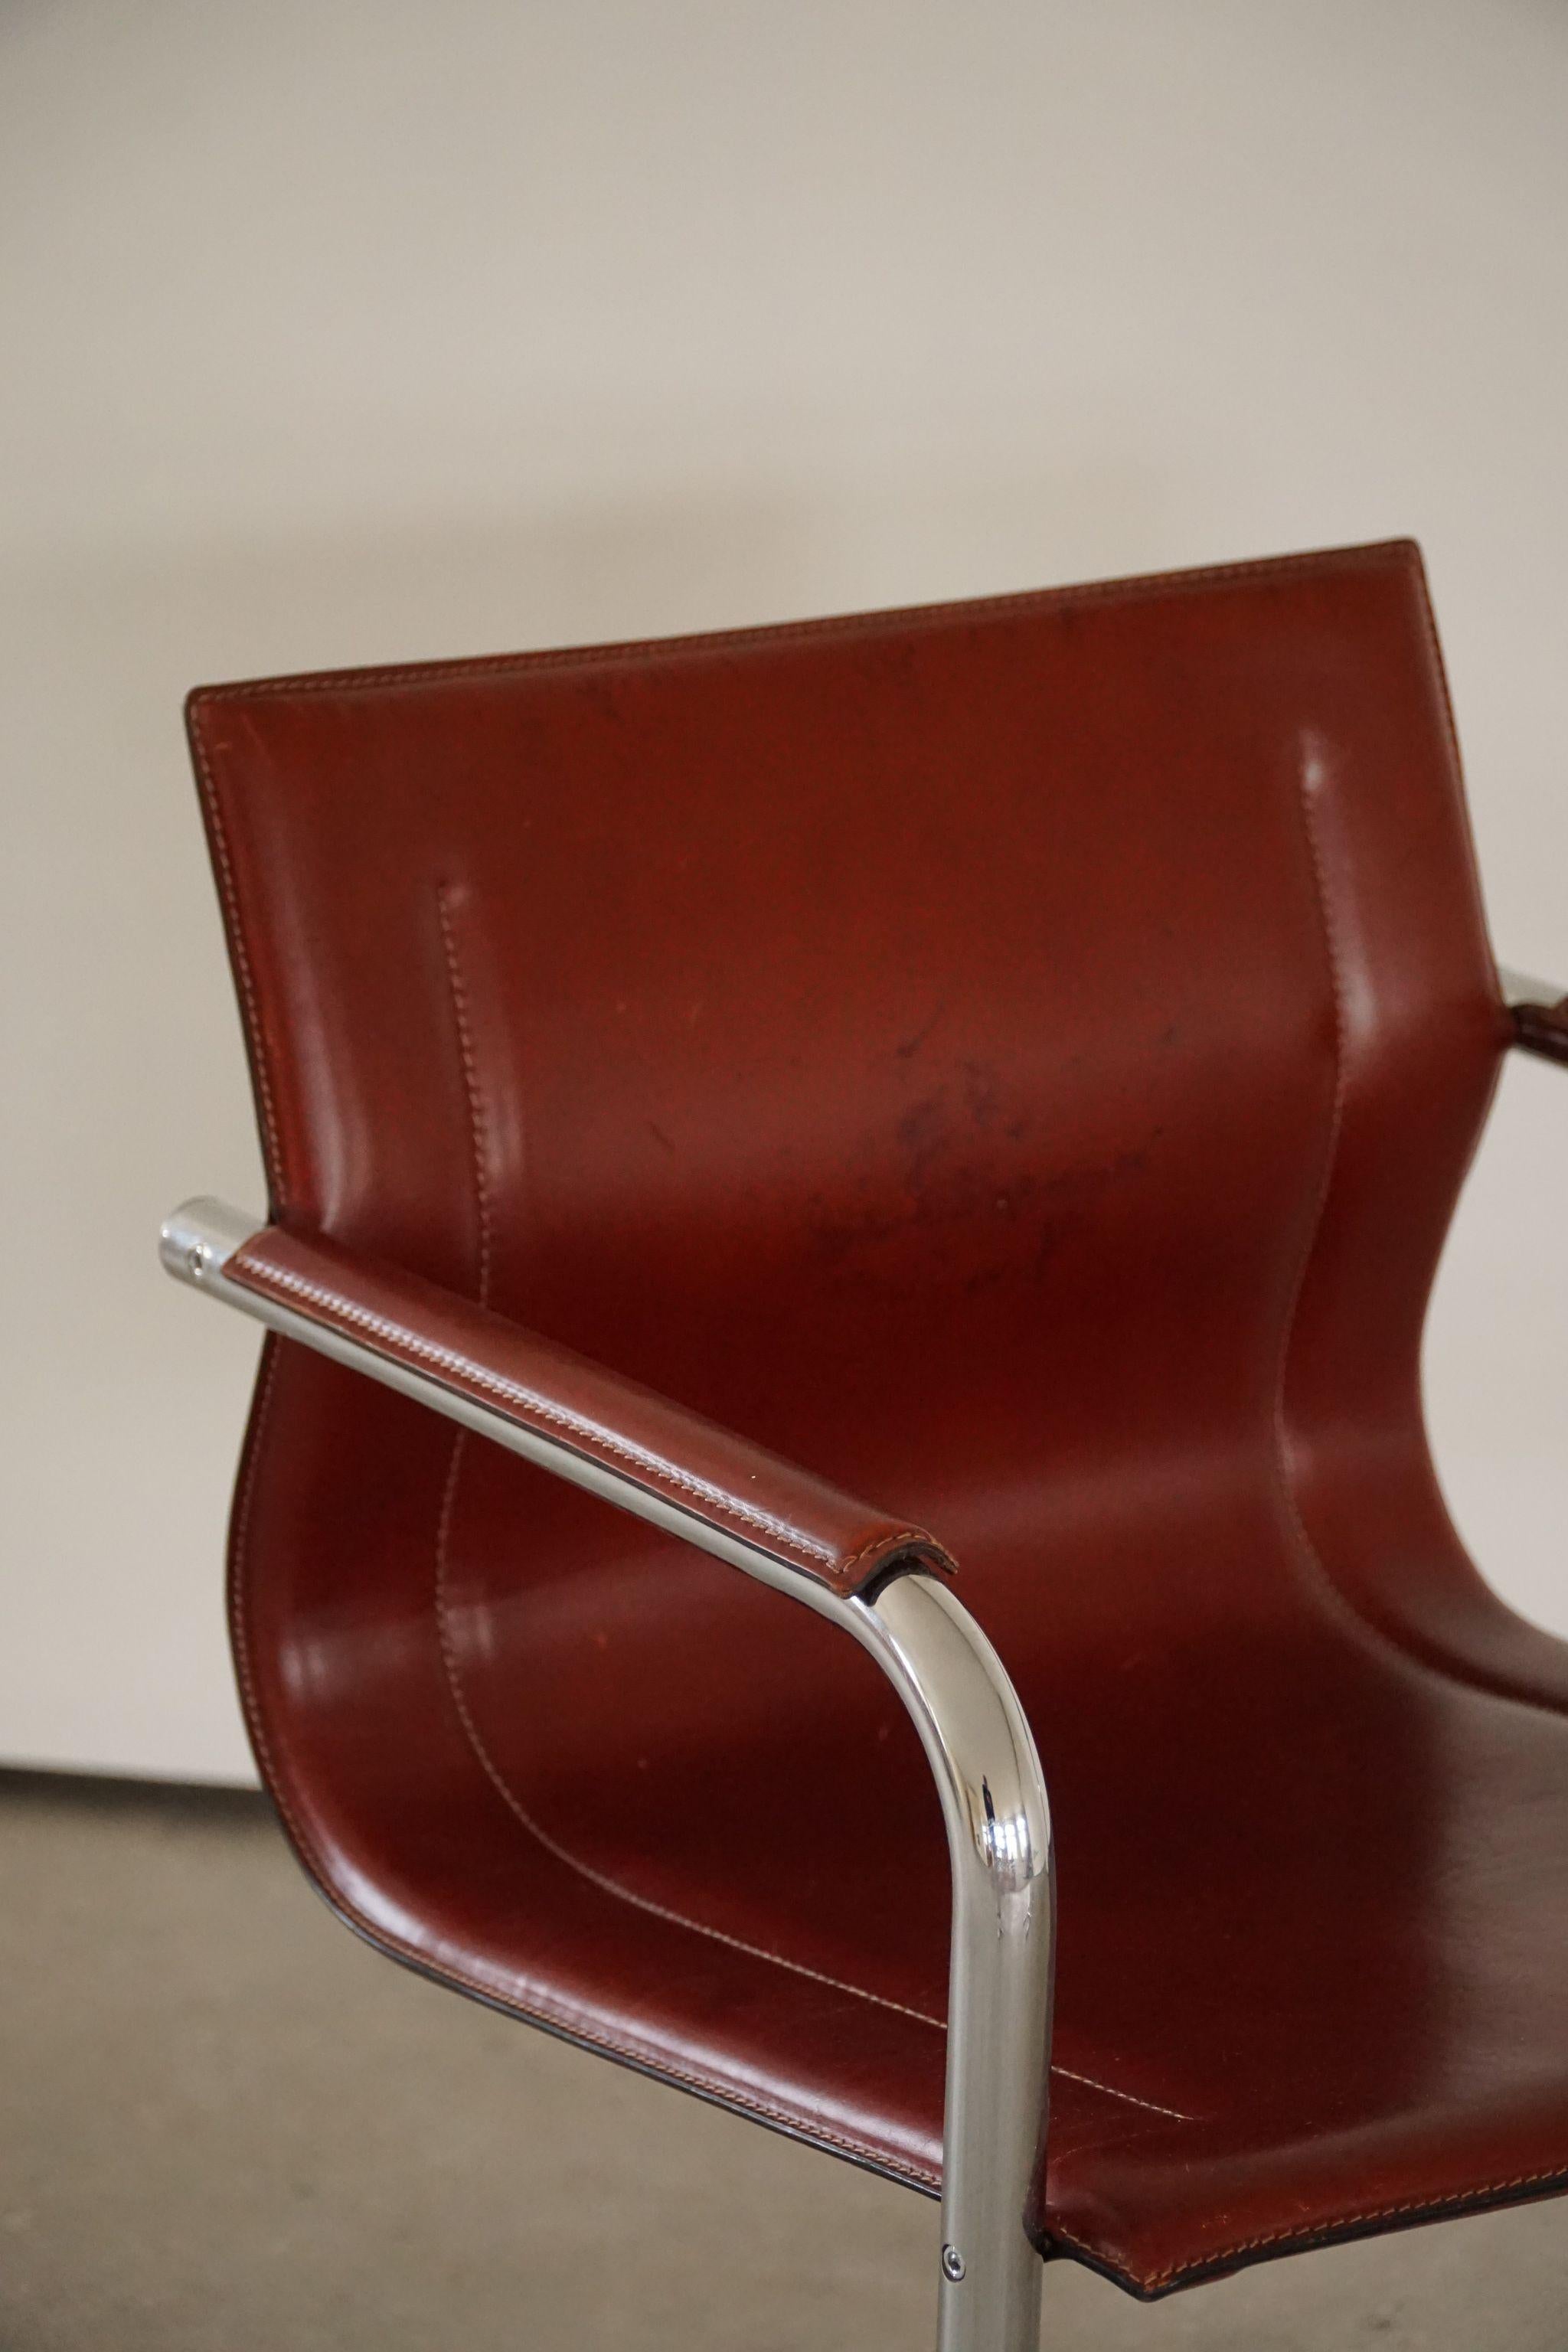 Freitragende 5er-Sessel aus Leder von Matteo Grassi, Modell MG15, Italien 70er Jahre (20. Jahrhundert) im Angebot